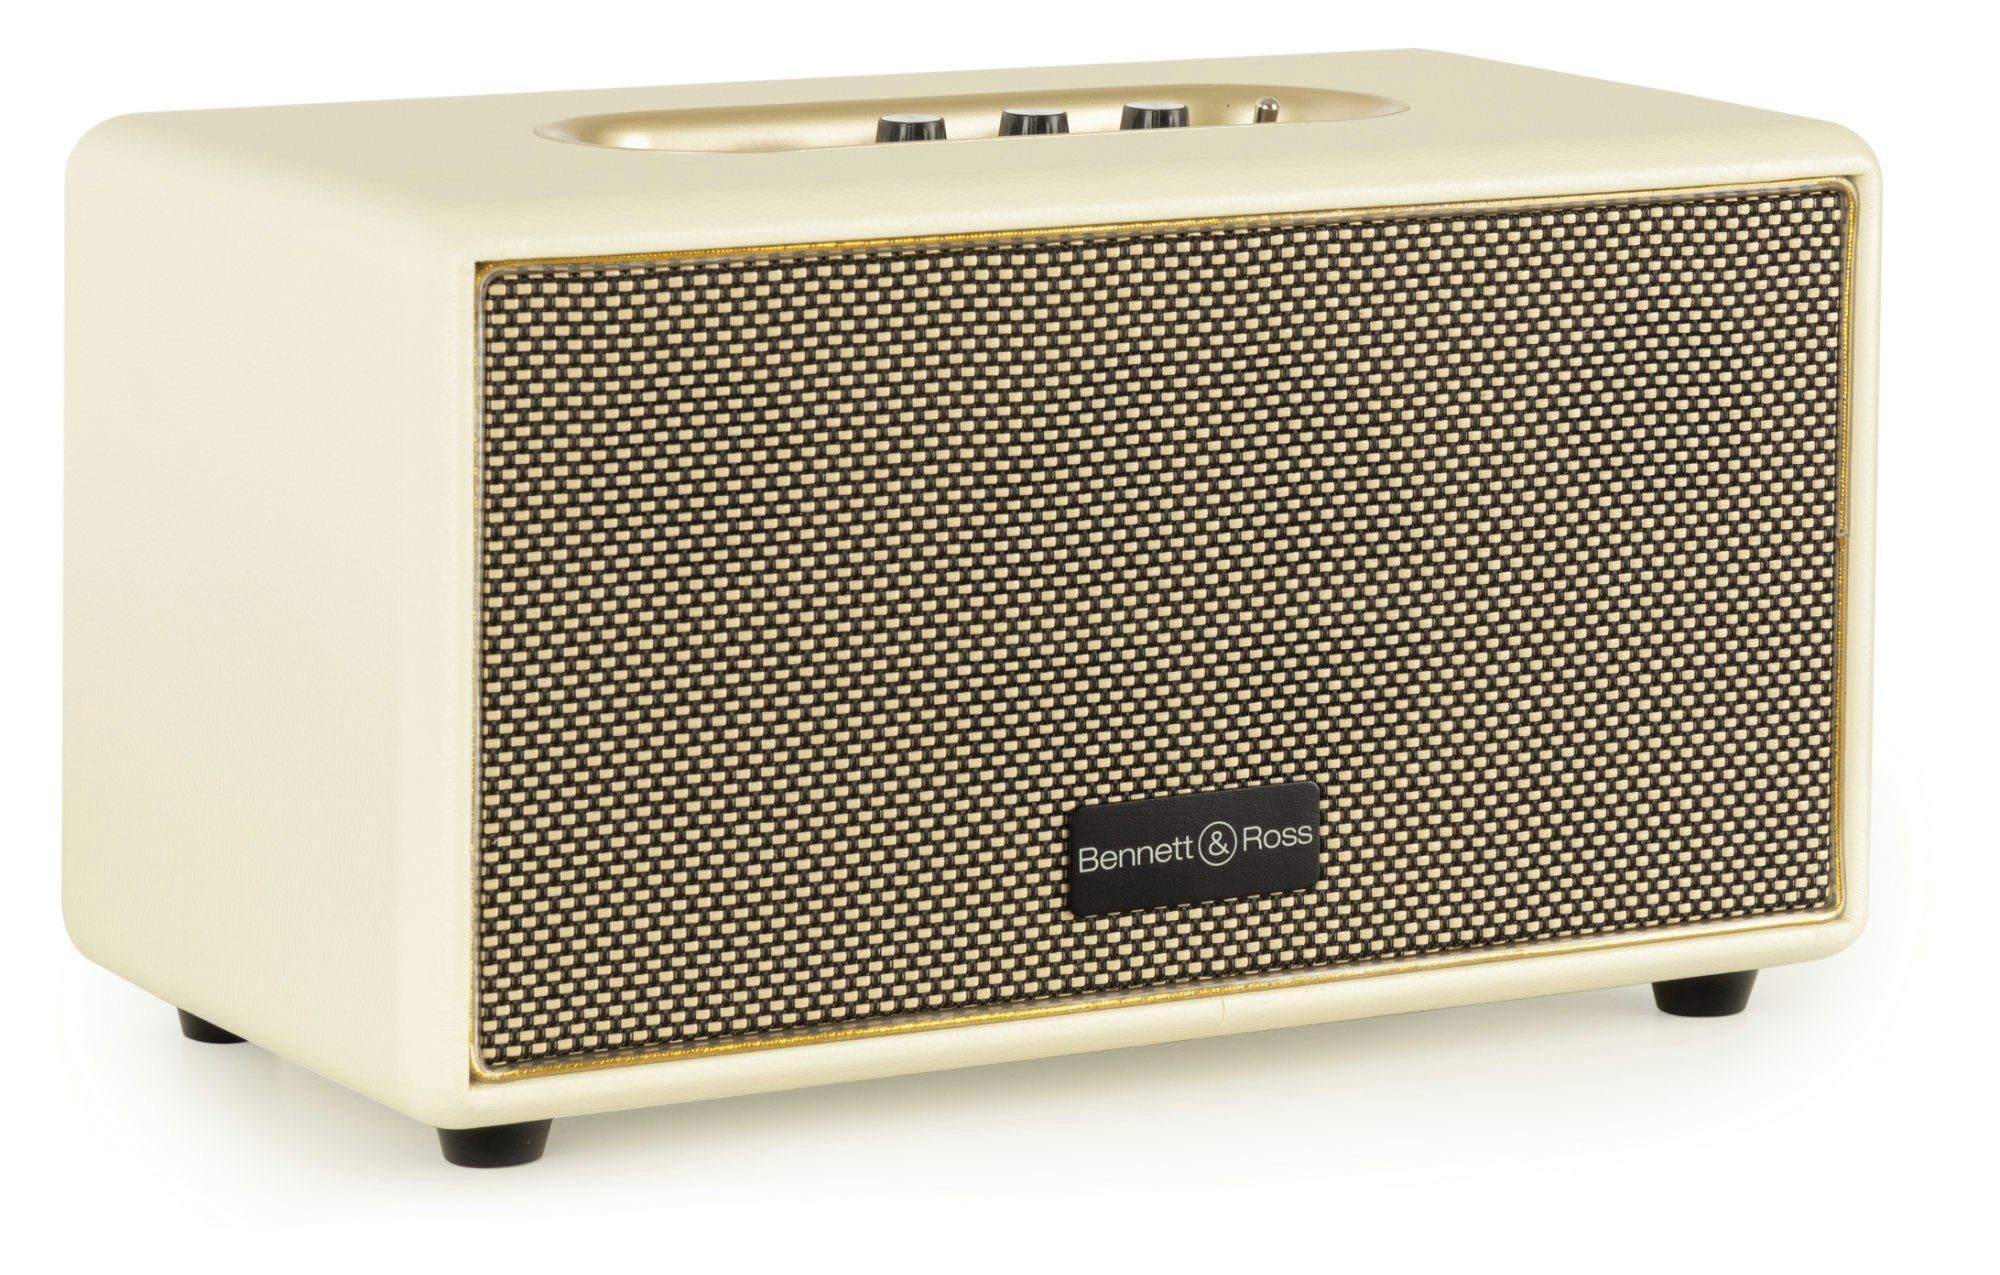 Blackmore W, Stereoanlage in Bennett Bluetooth (60 & Ross Lederoptik) Lautsprecher BB-860 Retro Creme-Weiß